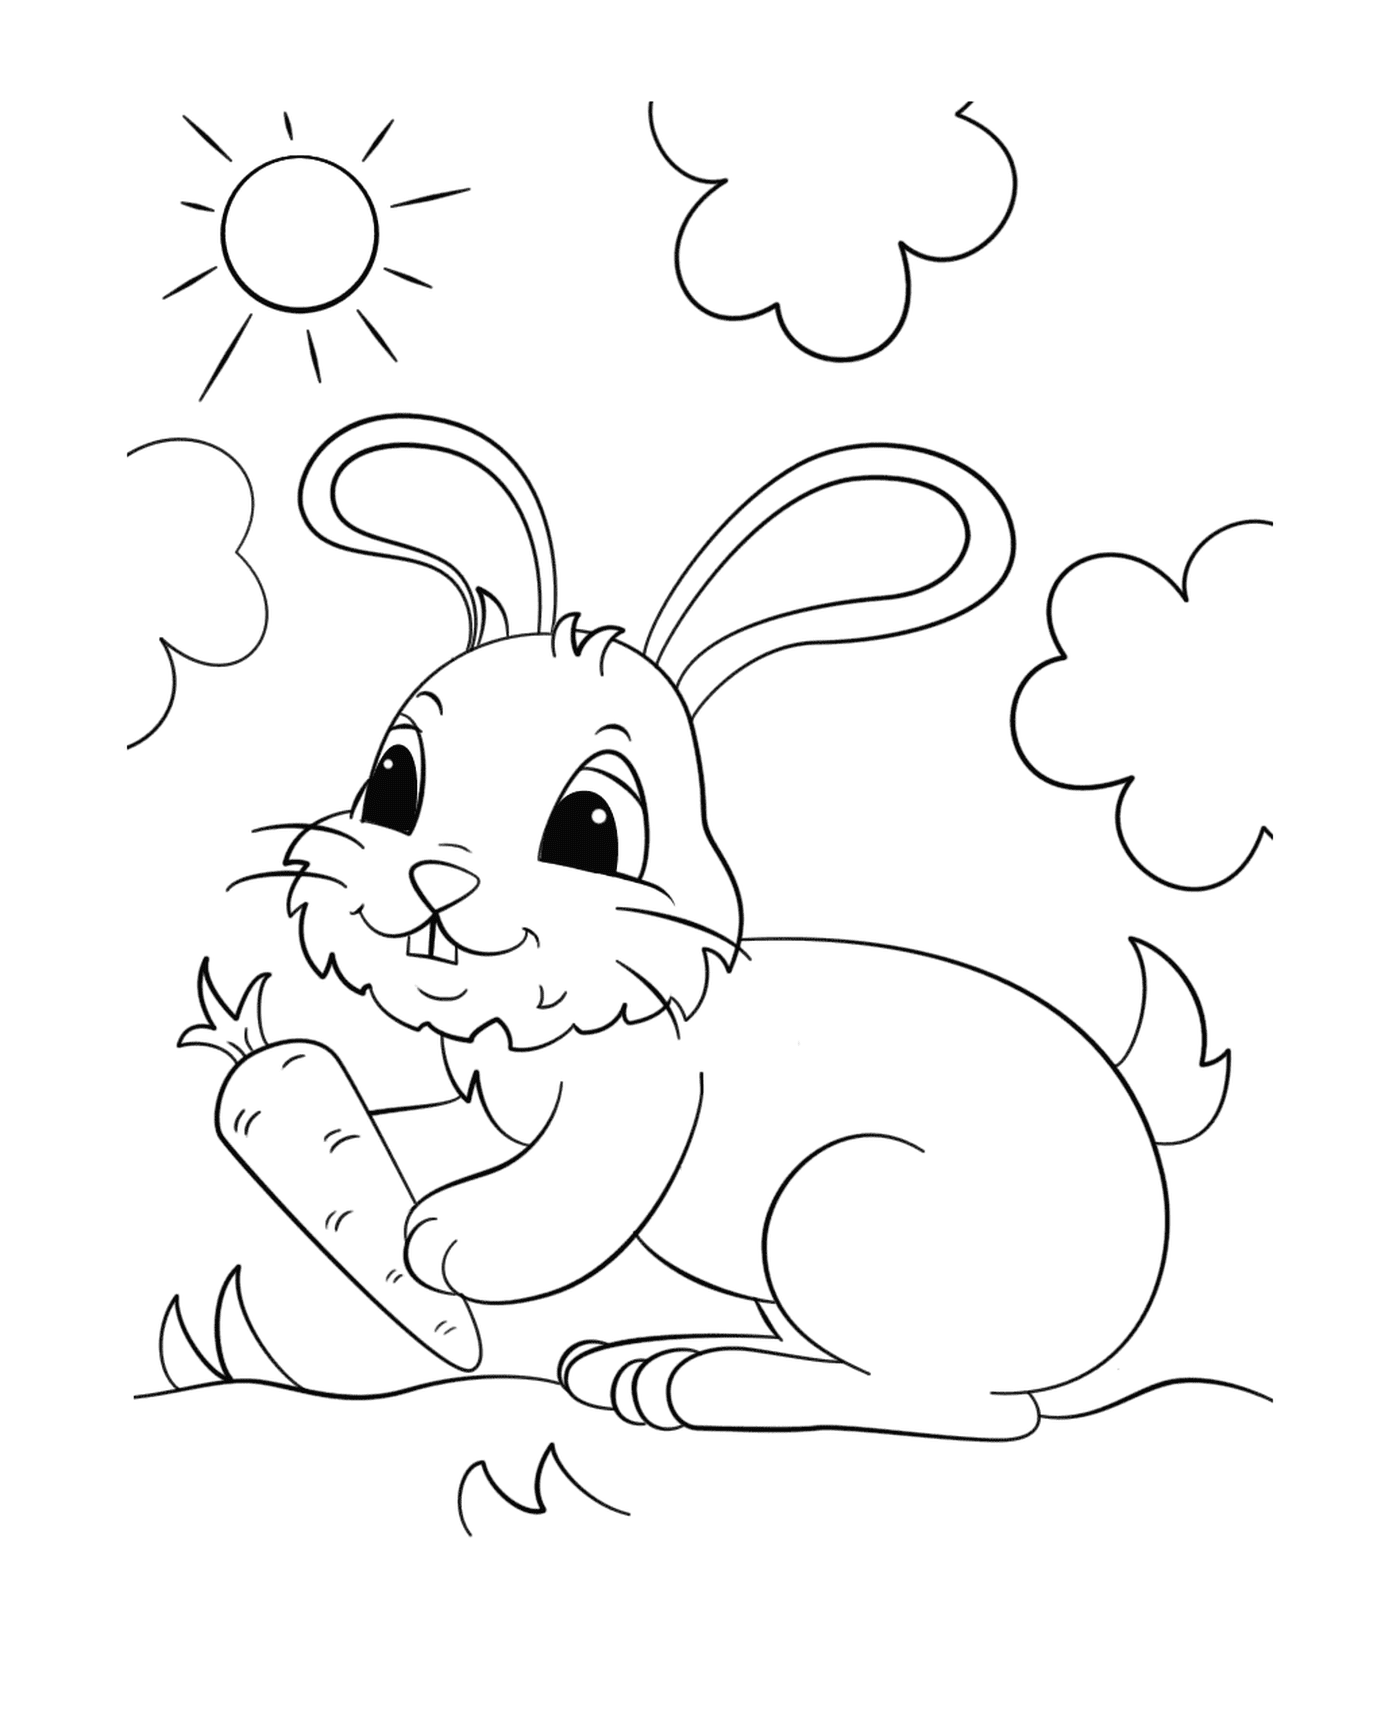  Rabbit holding a carrot under the sun 